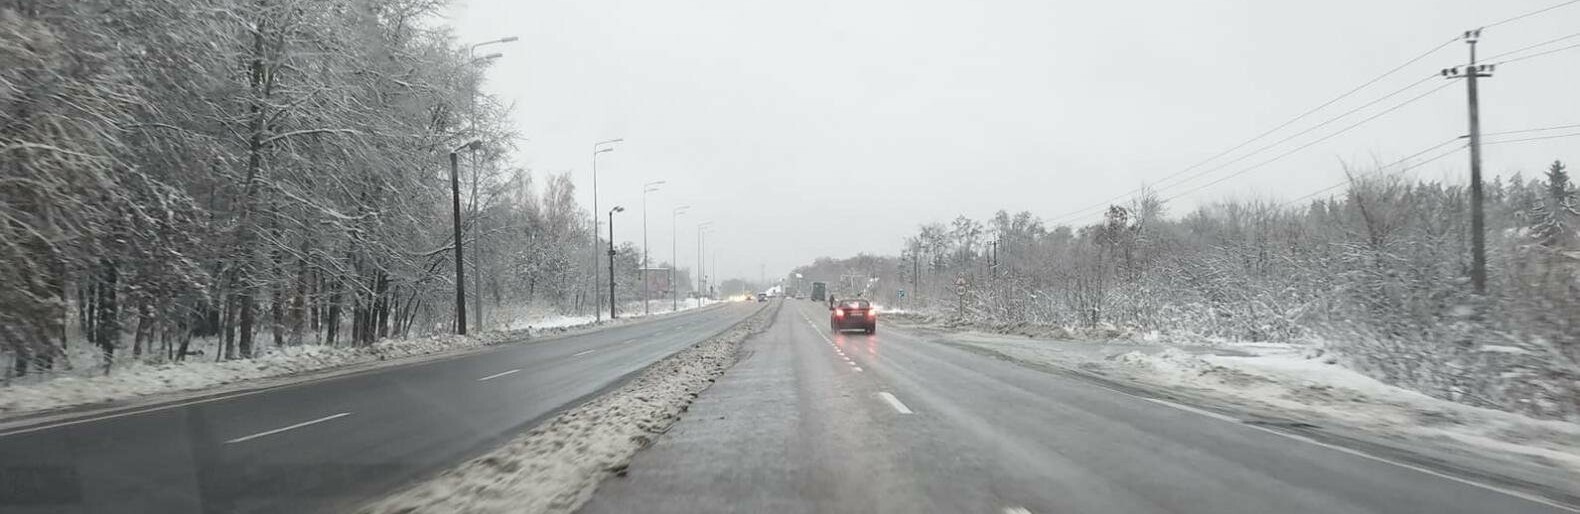  Рух автошляхами Житомирщини не ускладнено, незважаючи на крижаний дощ, - САД